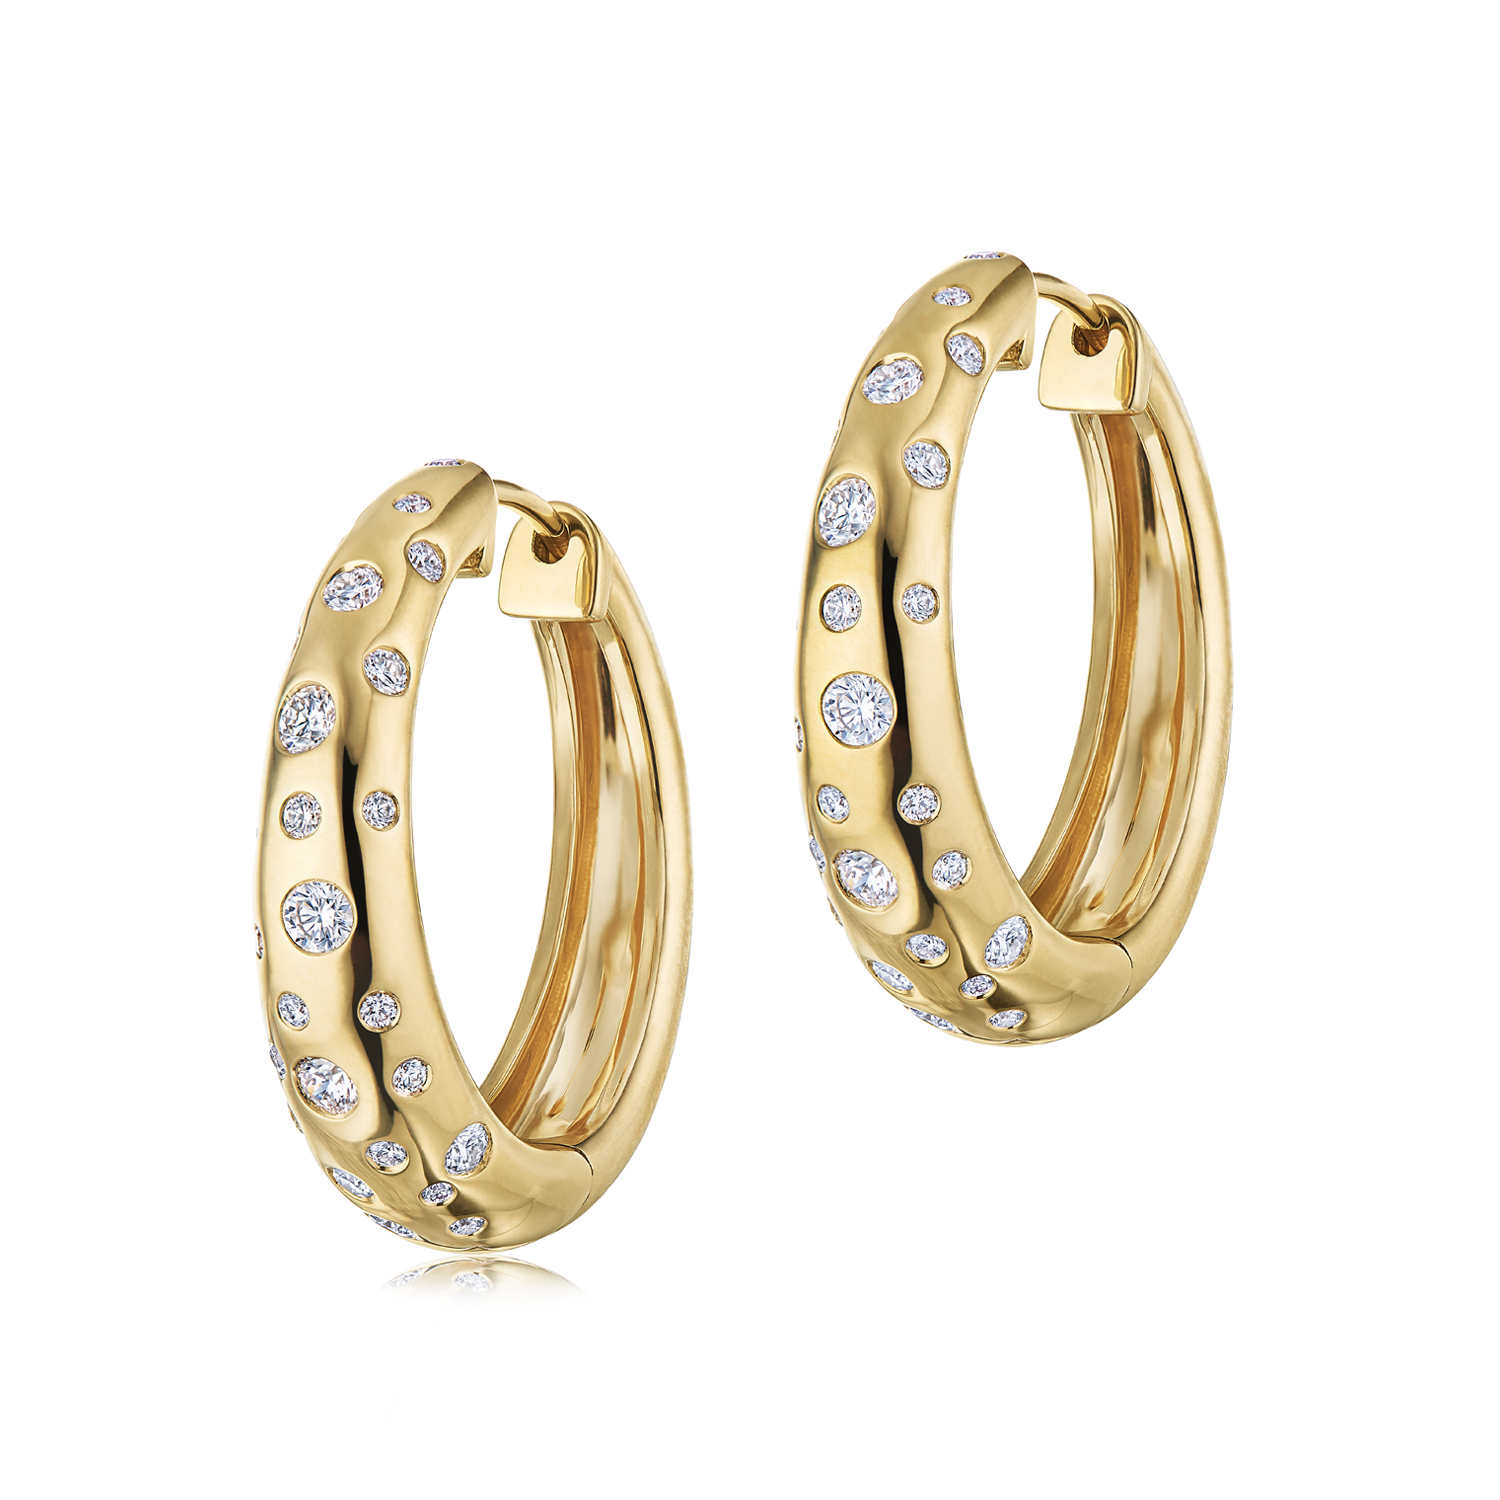 Filomena 18K Diamond Hoop Earrings in Blackened Gold by The Circle